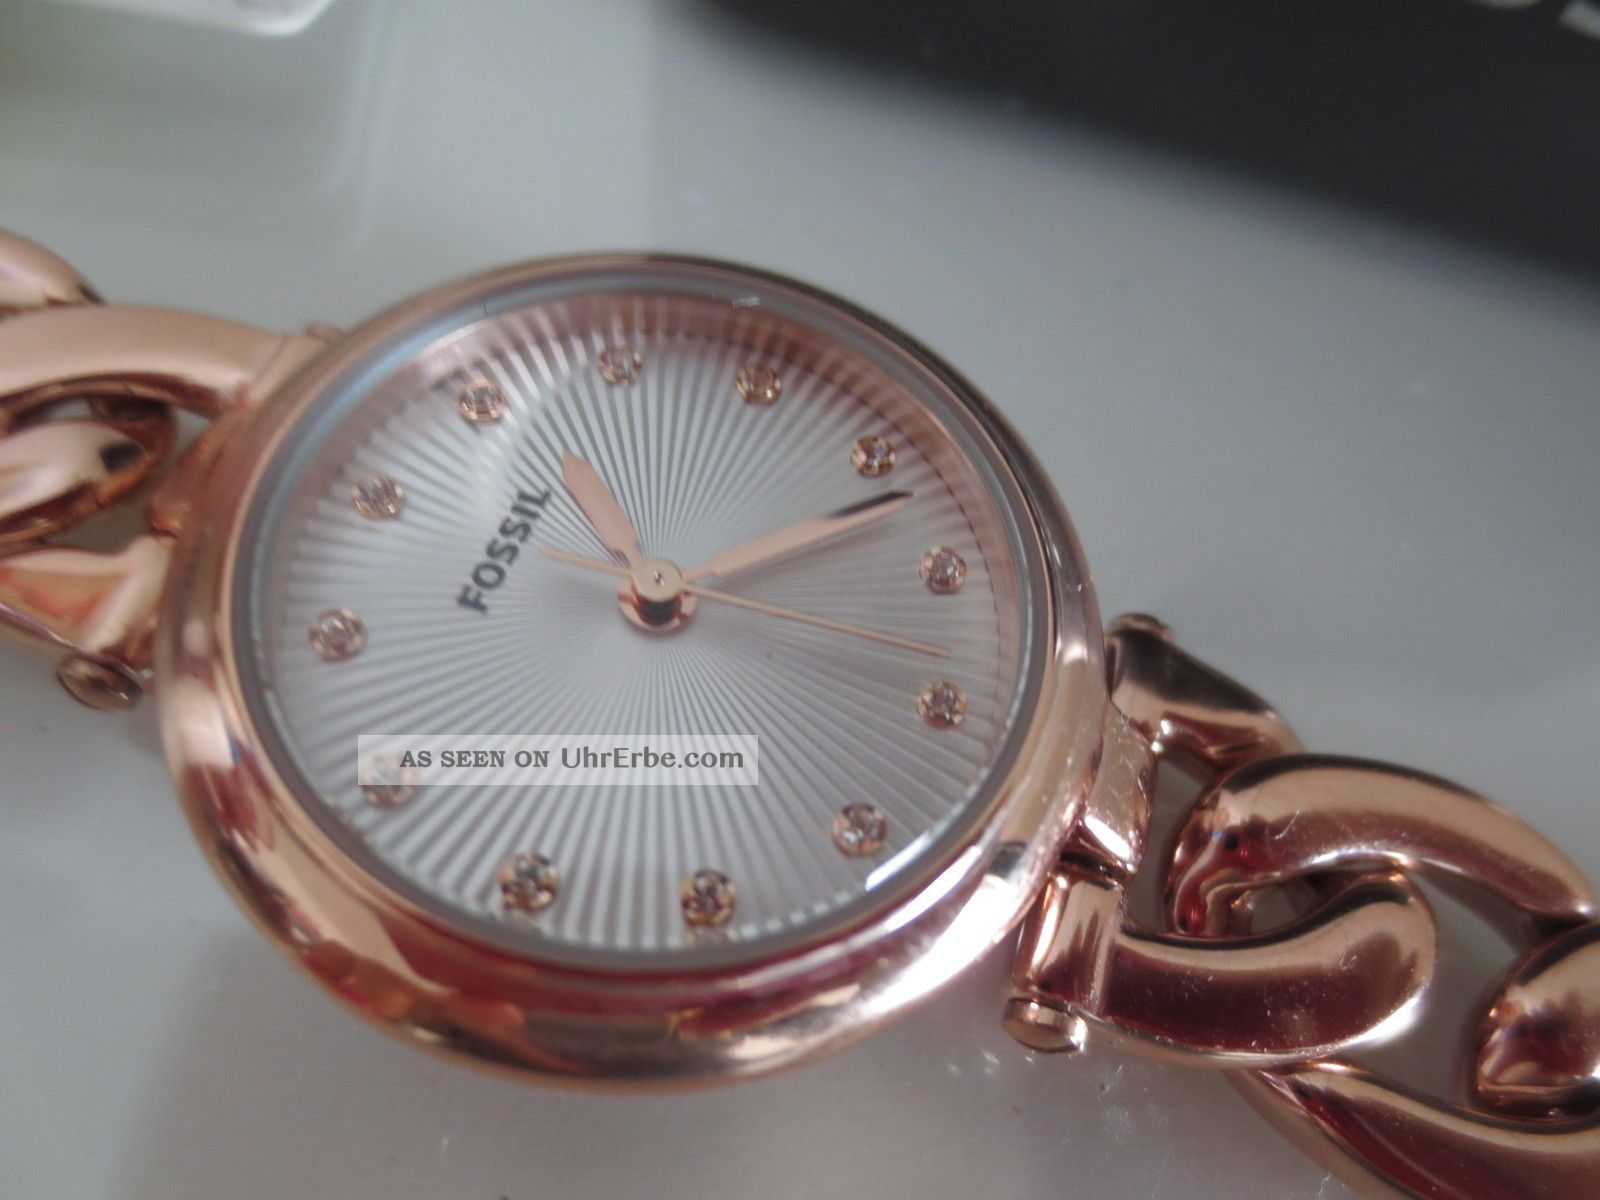 Fossil Damen Armband Uhr Es3392 Olive Rosegold Uhren Edahlstahl Damenuhr Armbanduhren Bild